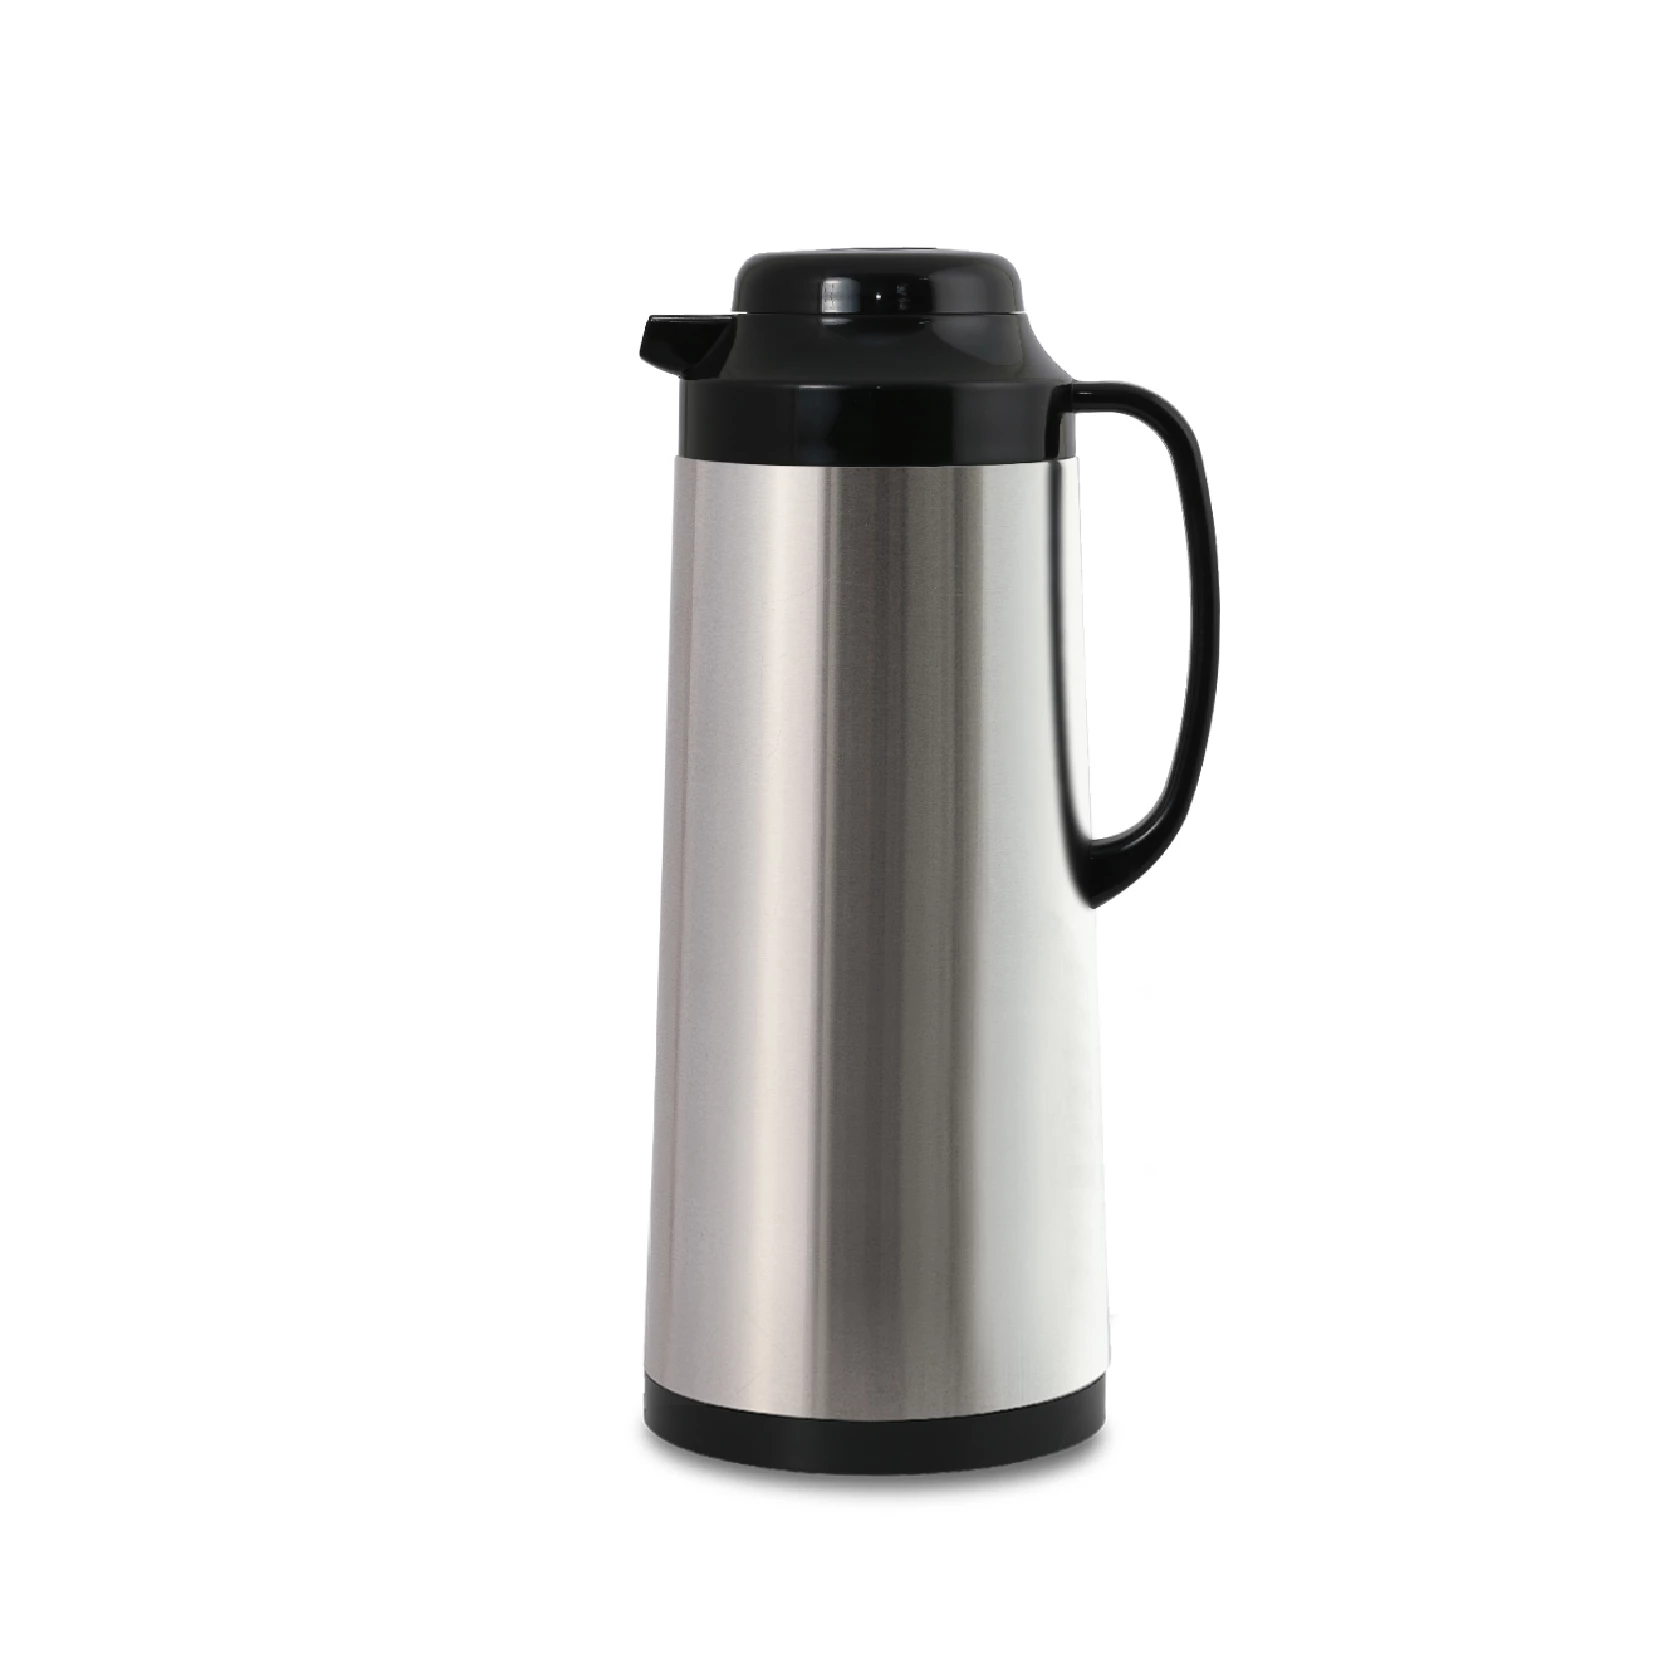 https://vacuumflask.rangdong.com.vn/static/Coffee-series-3/av4.jpg